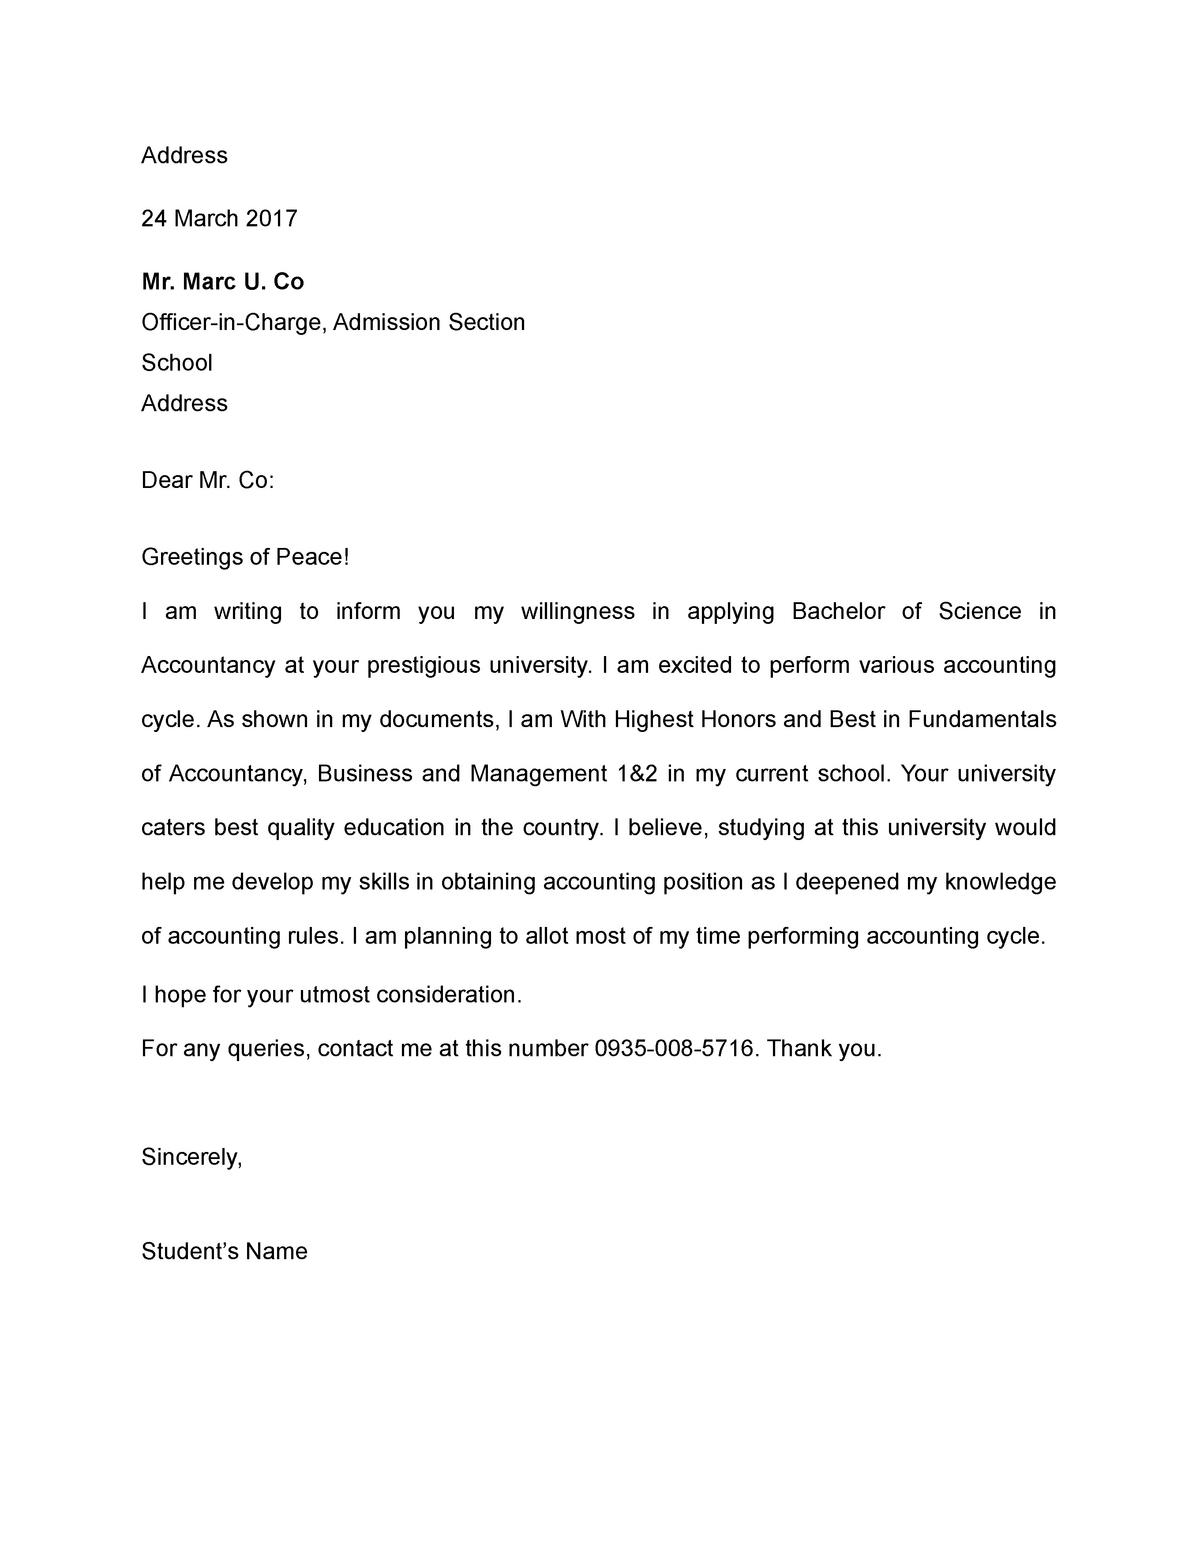 Sample of College Admission Letter - Address 13 March 13 Mr